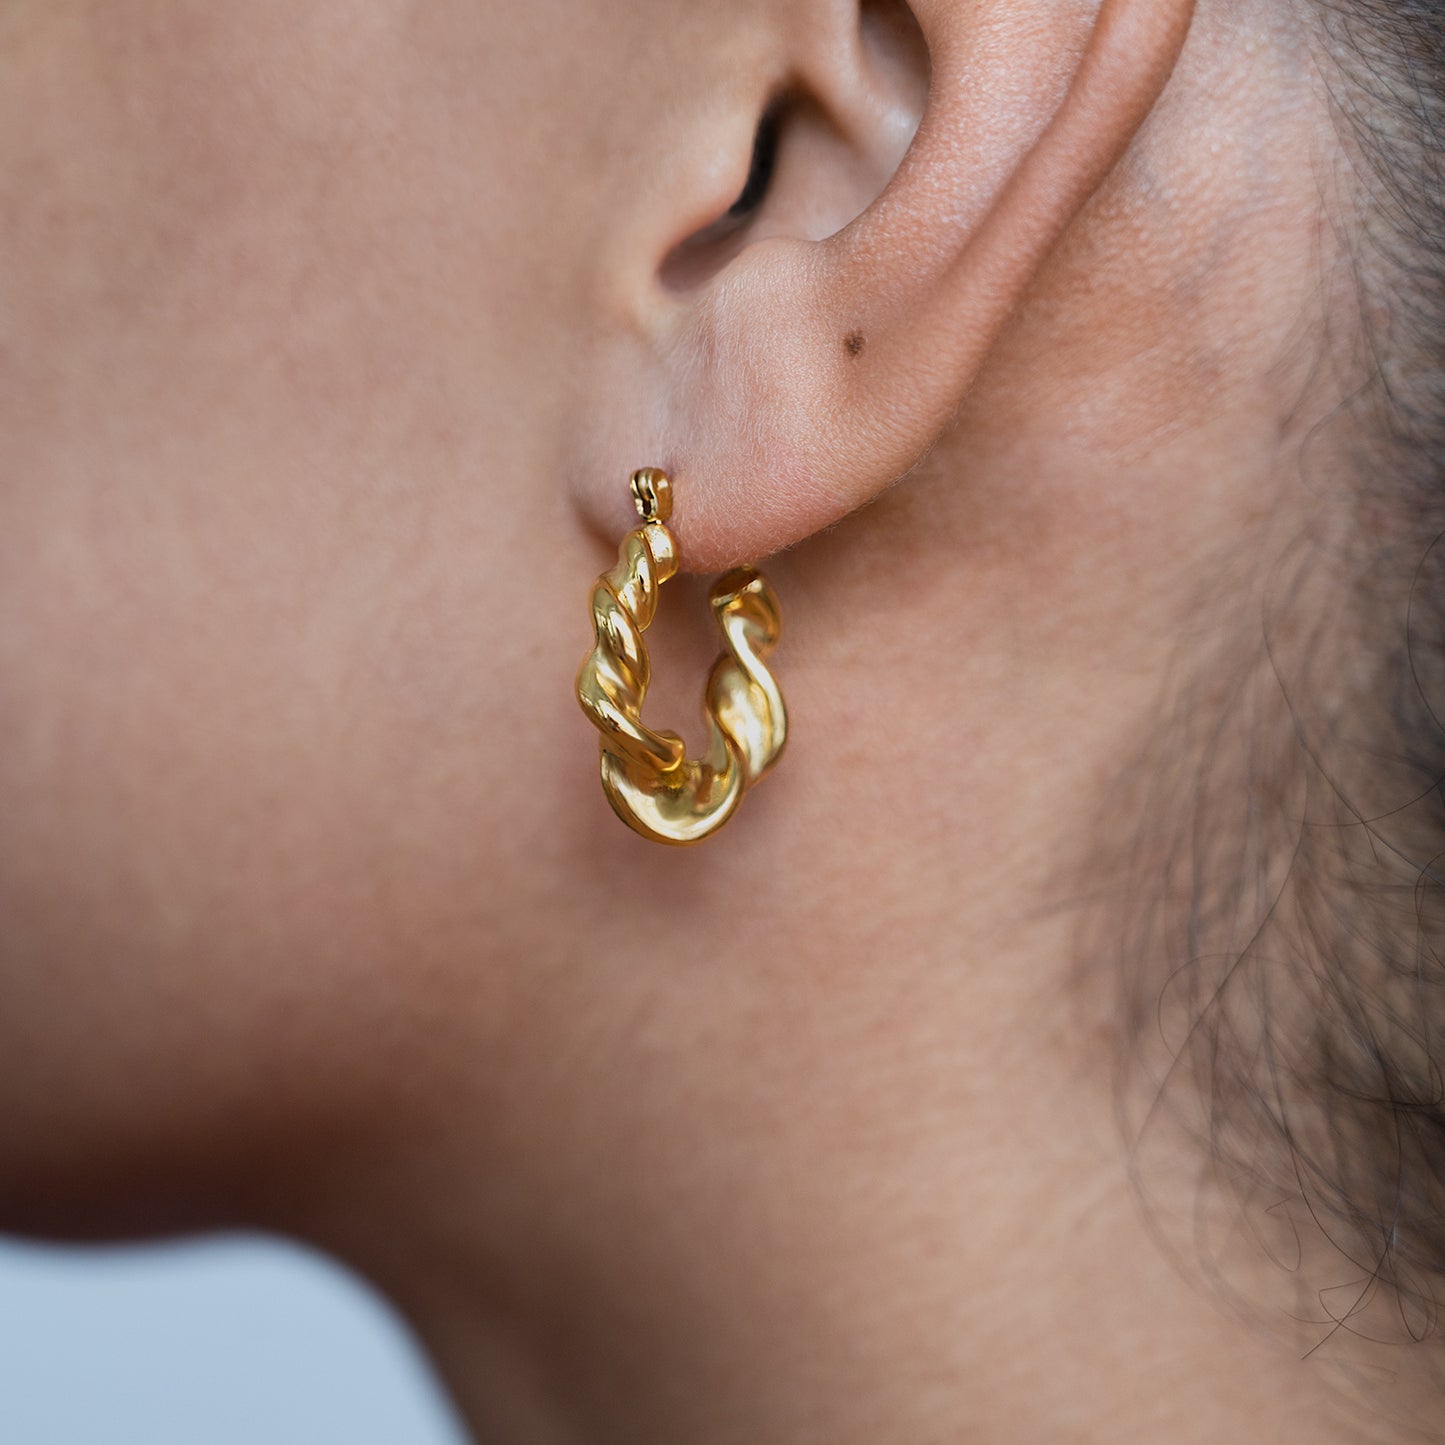 Chunky Twisted Hoop Earrings Non Tarnish shown worn in a model's ear